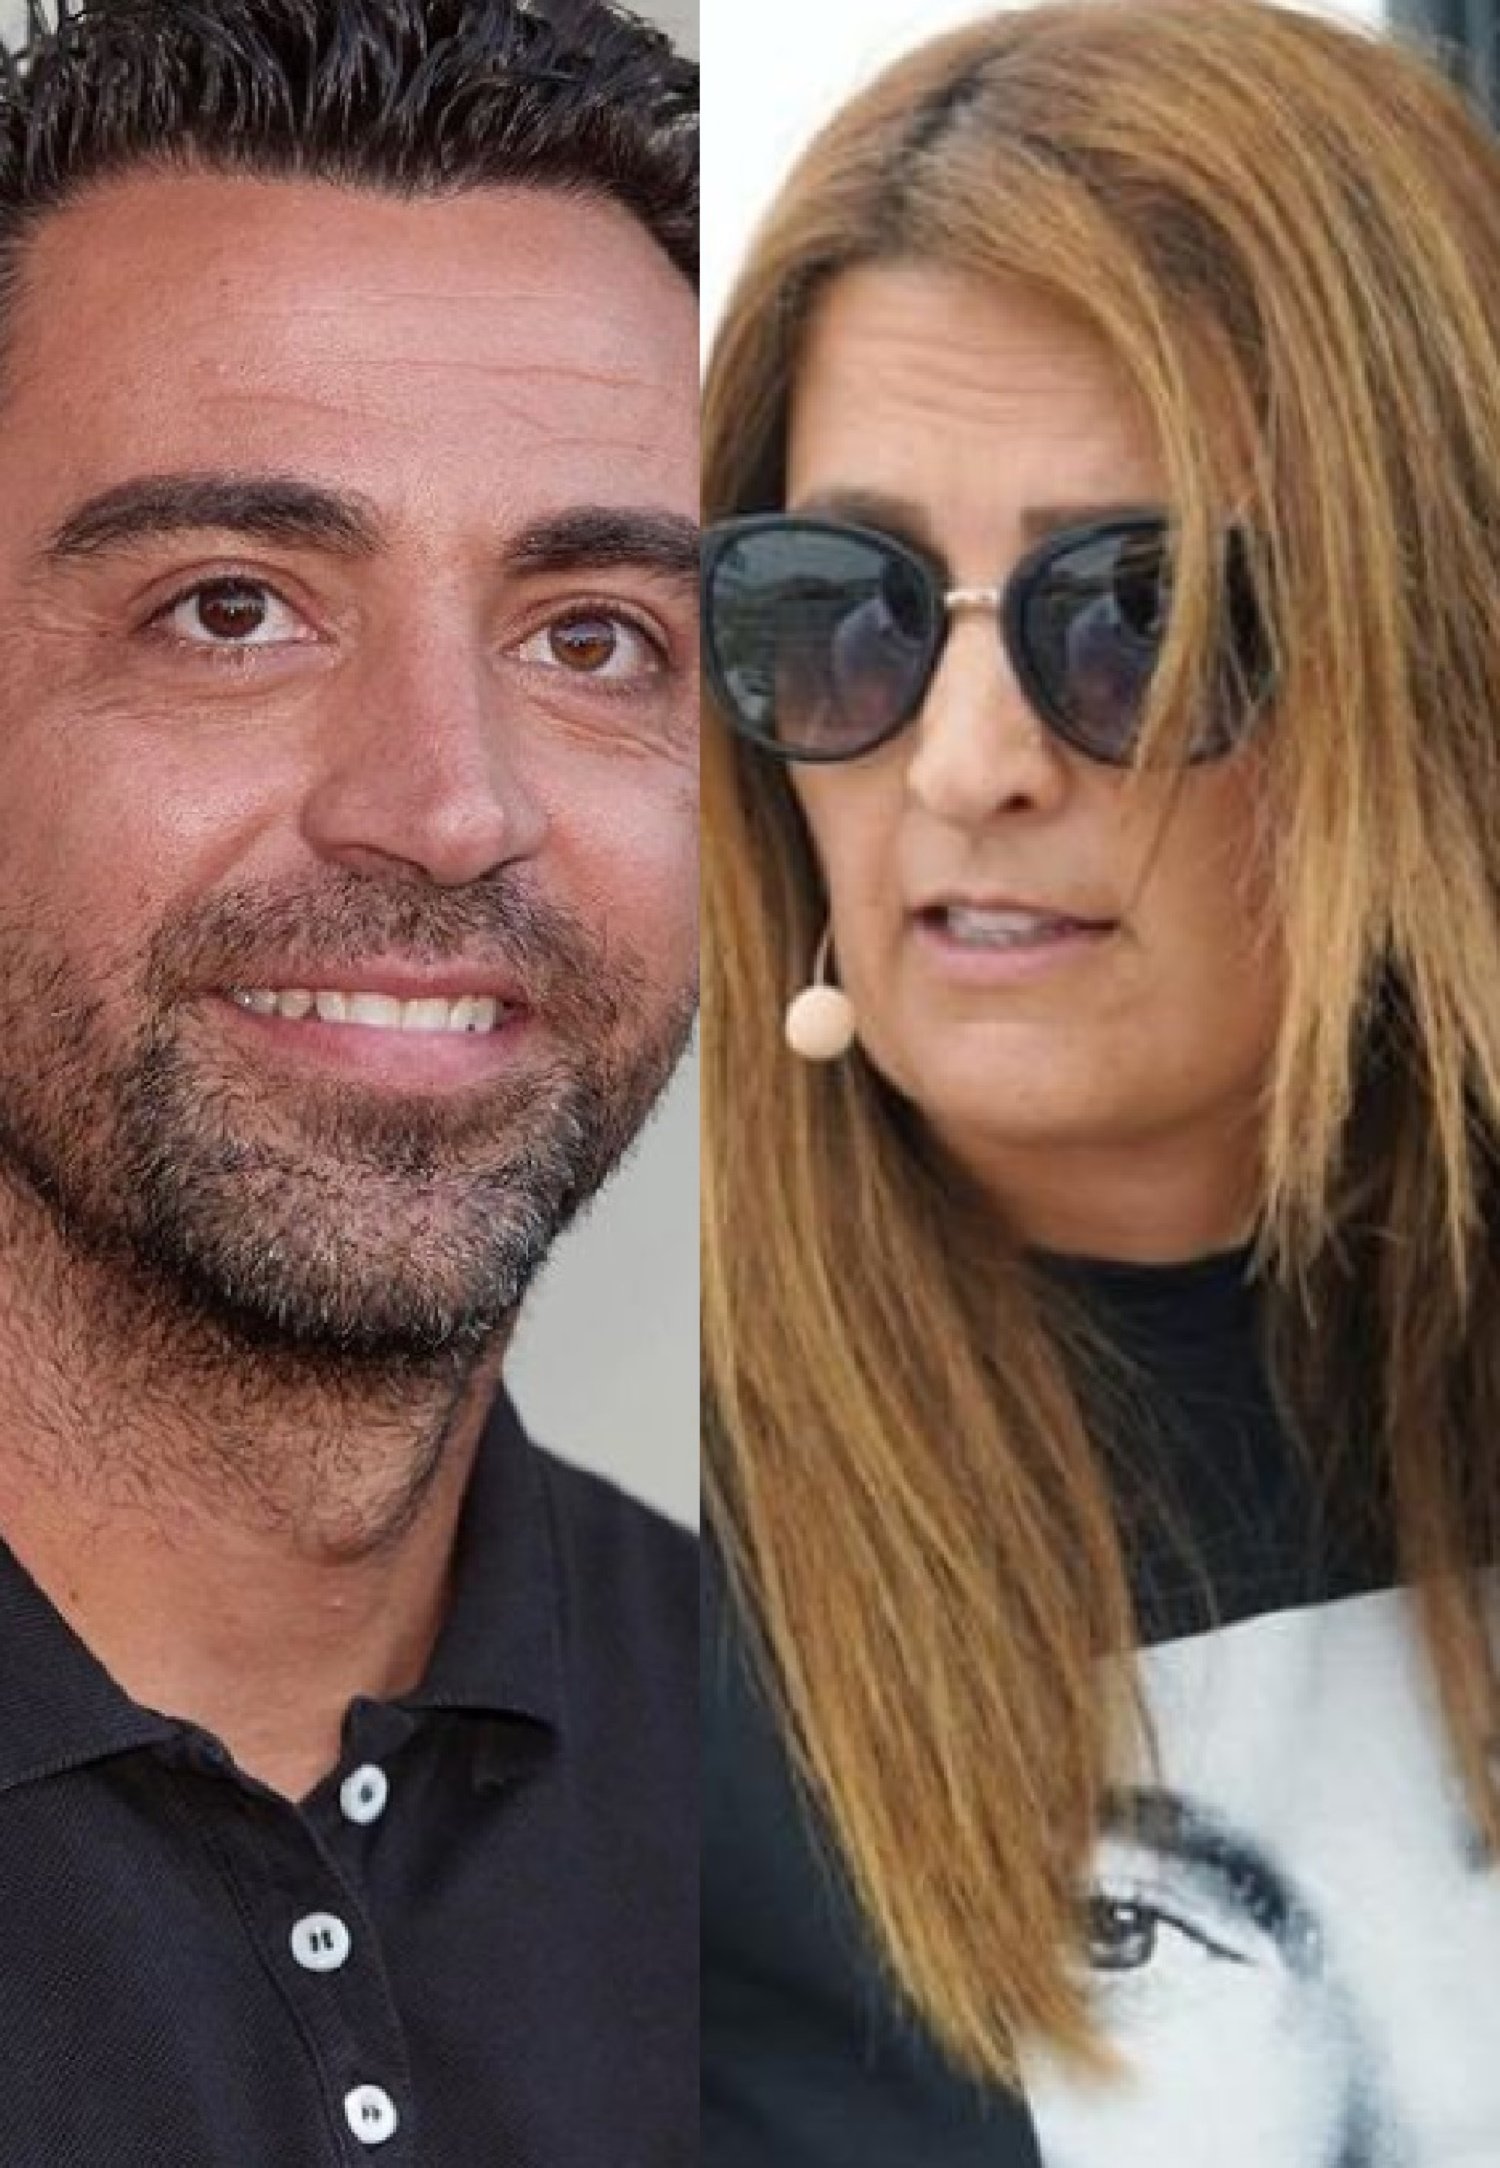 Laura Fa destrossa Xavi abans de marxar de Qatar: "Deja de decir gilipolleces"